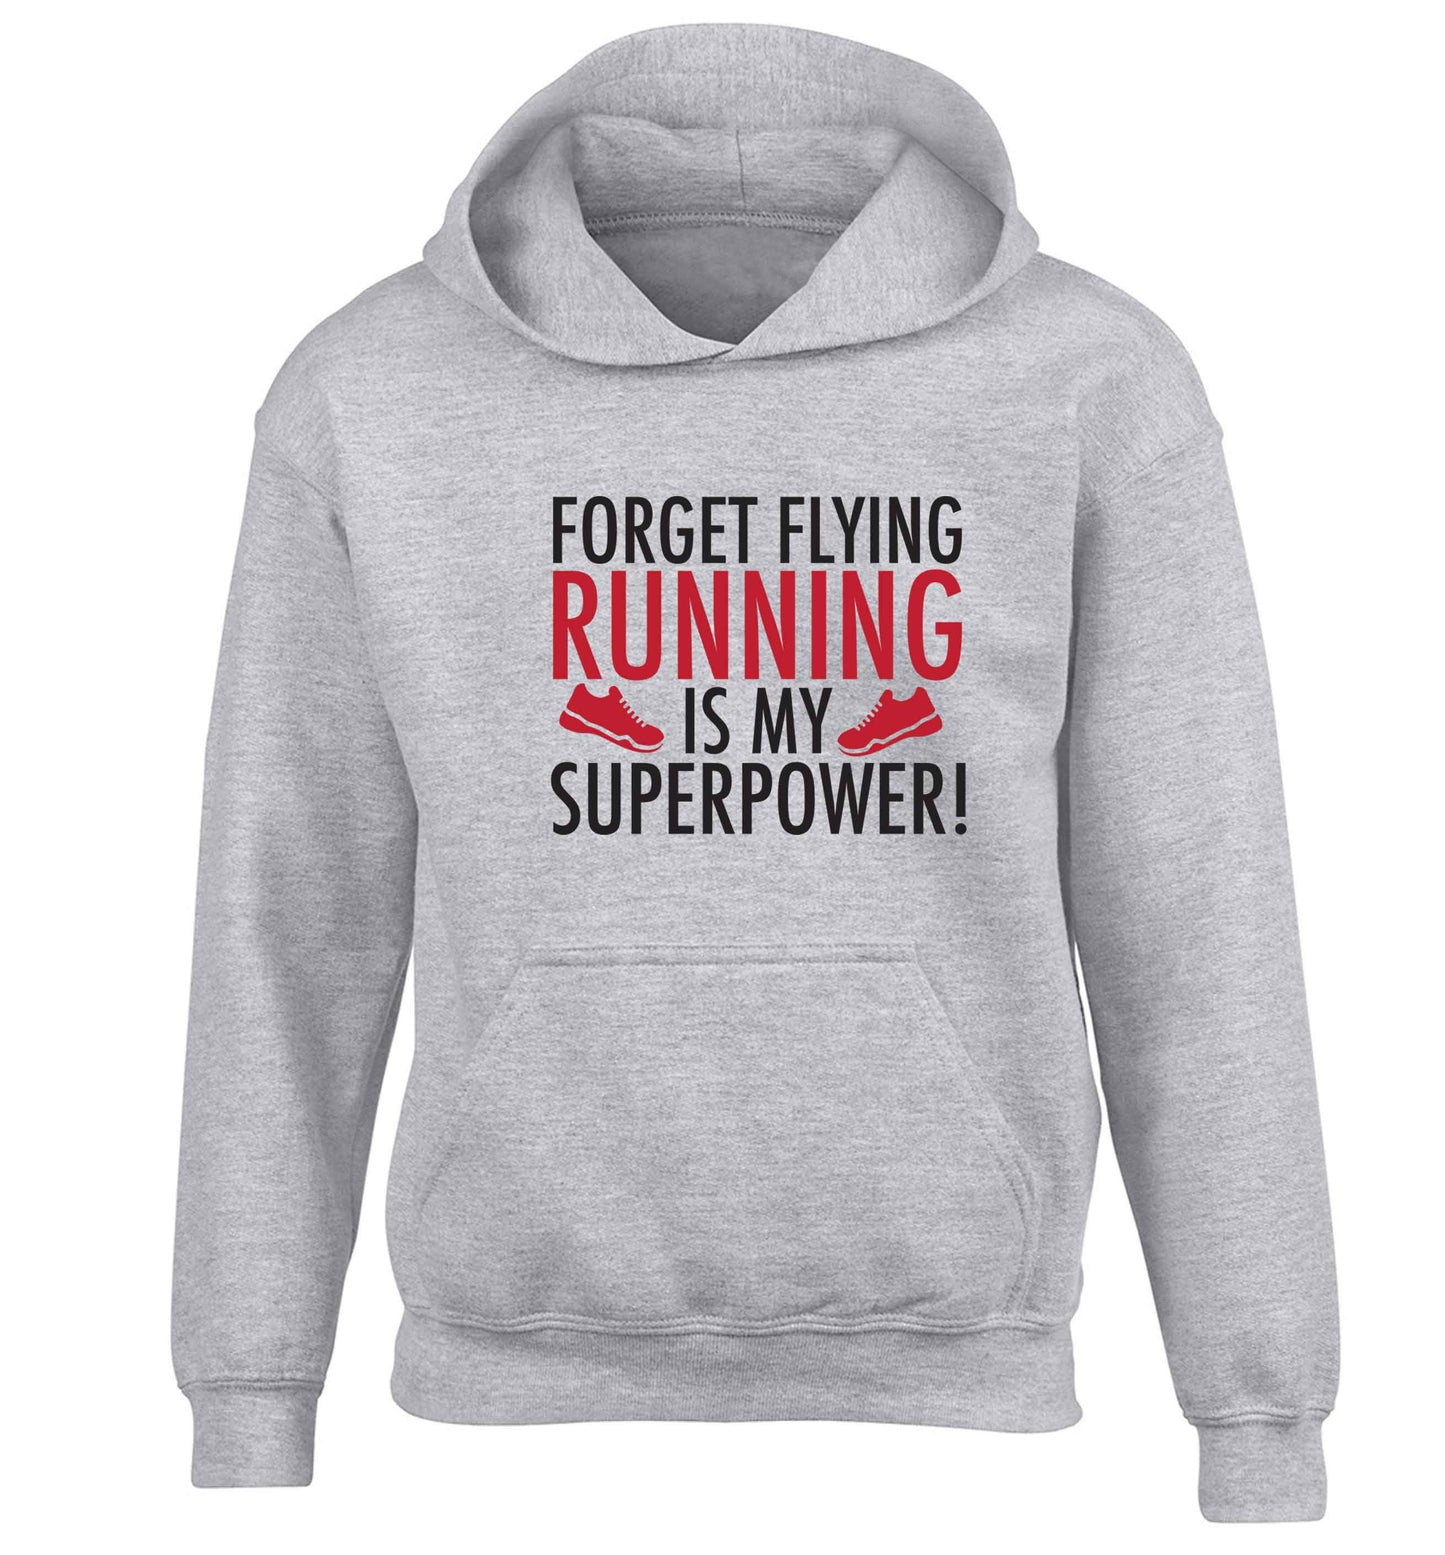 Forget flying running is my superpower children's grey hoodie 12-13 Years